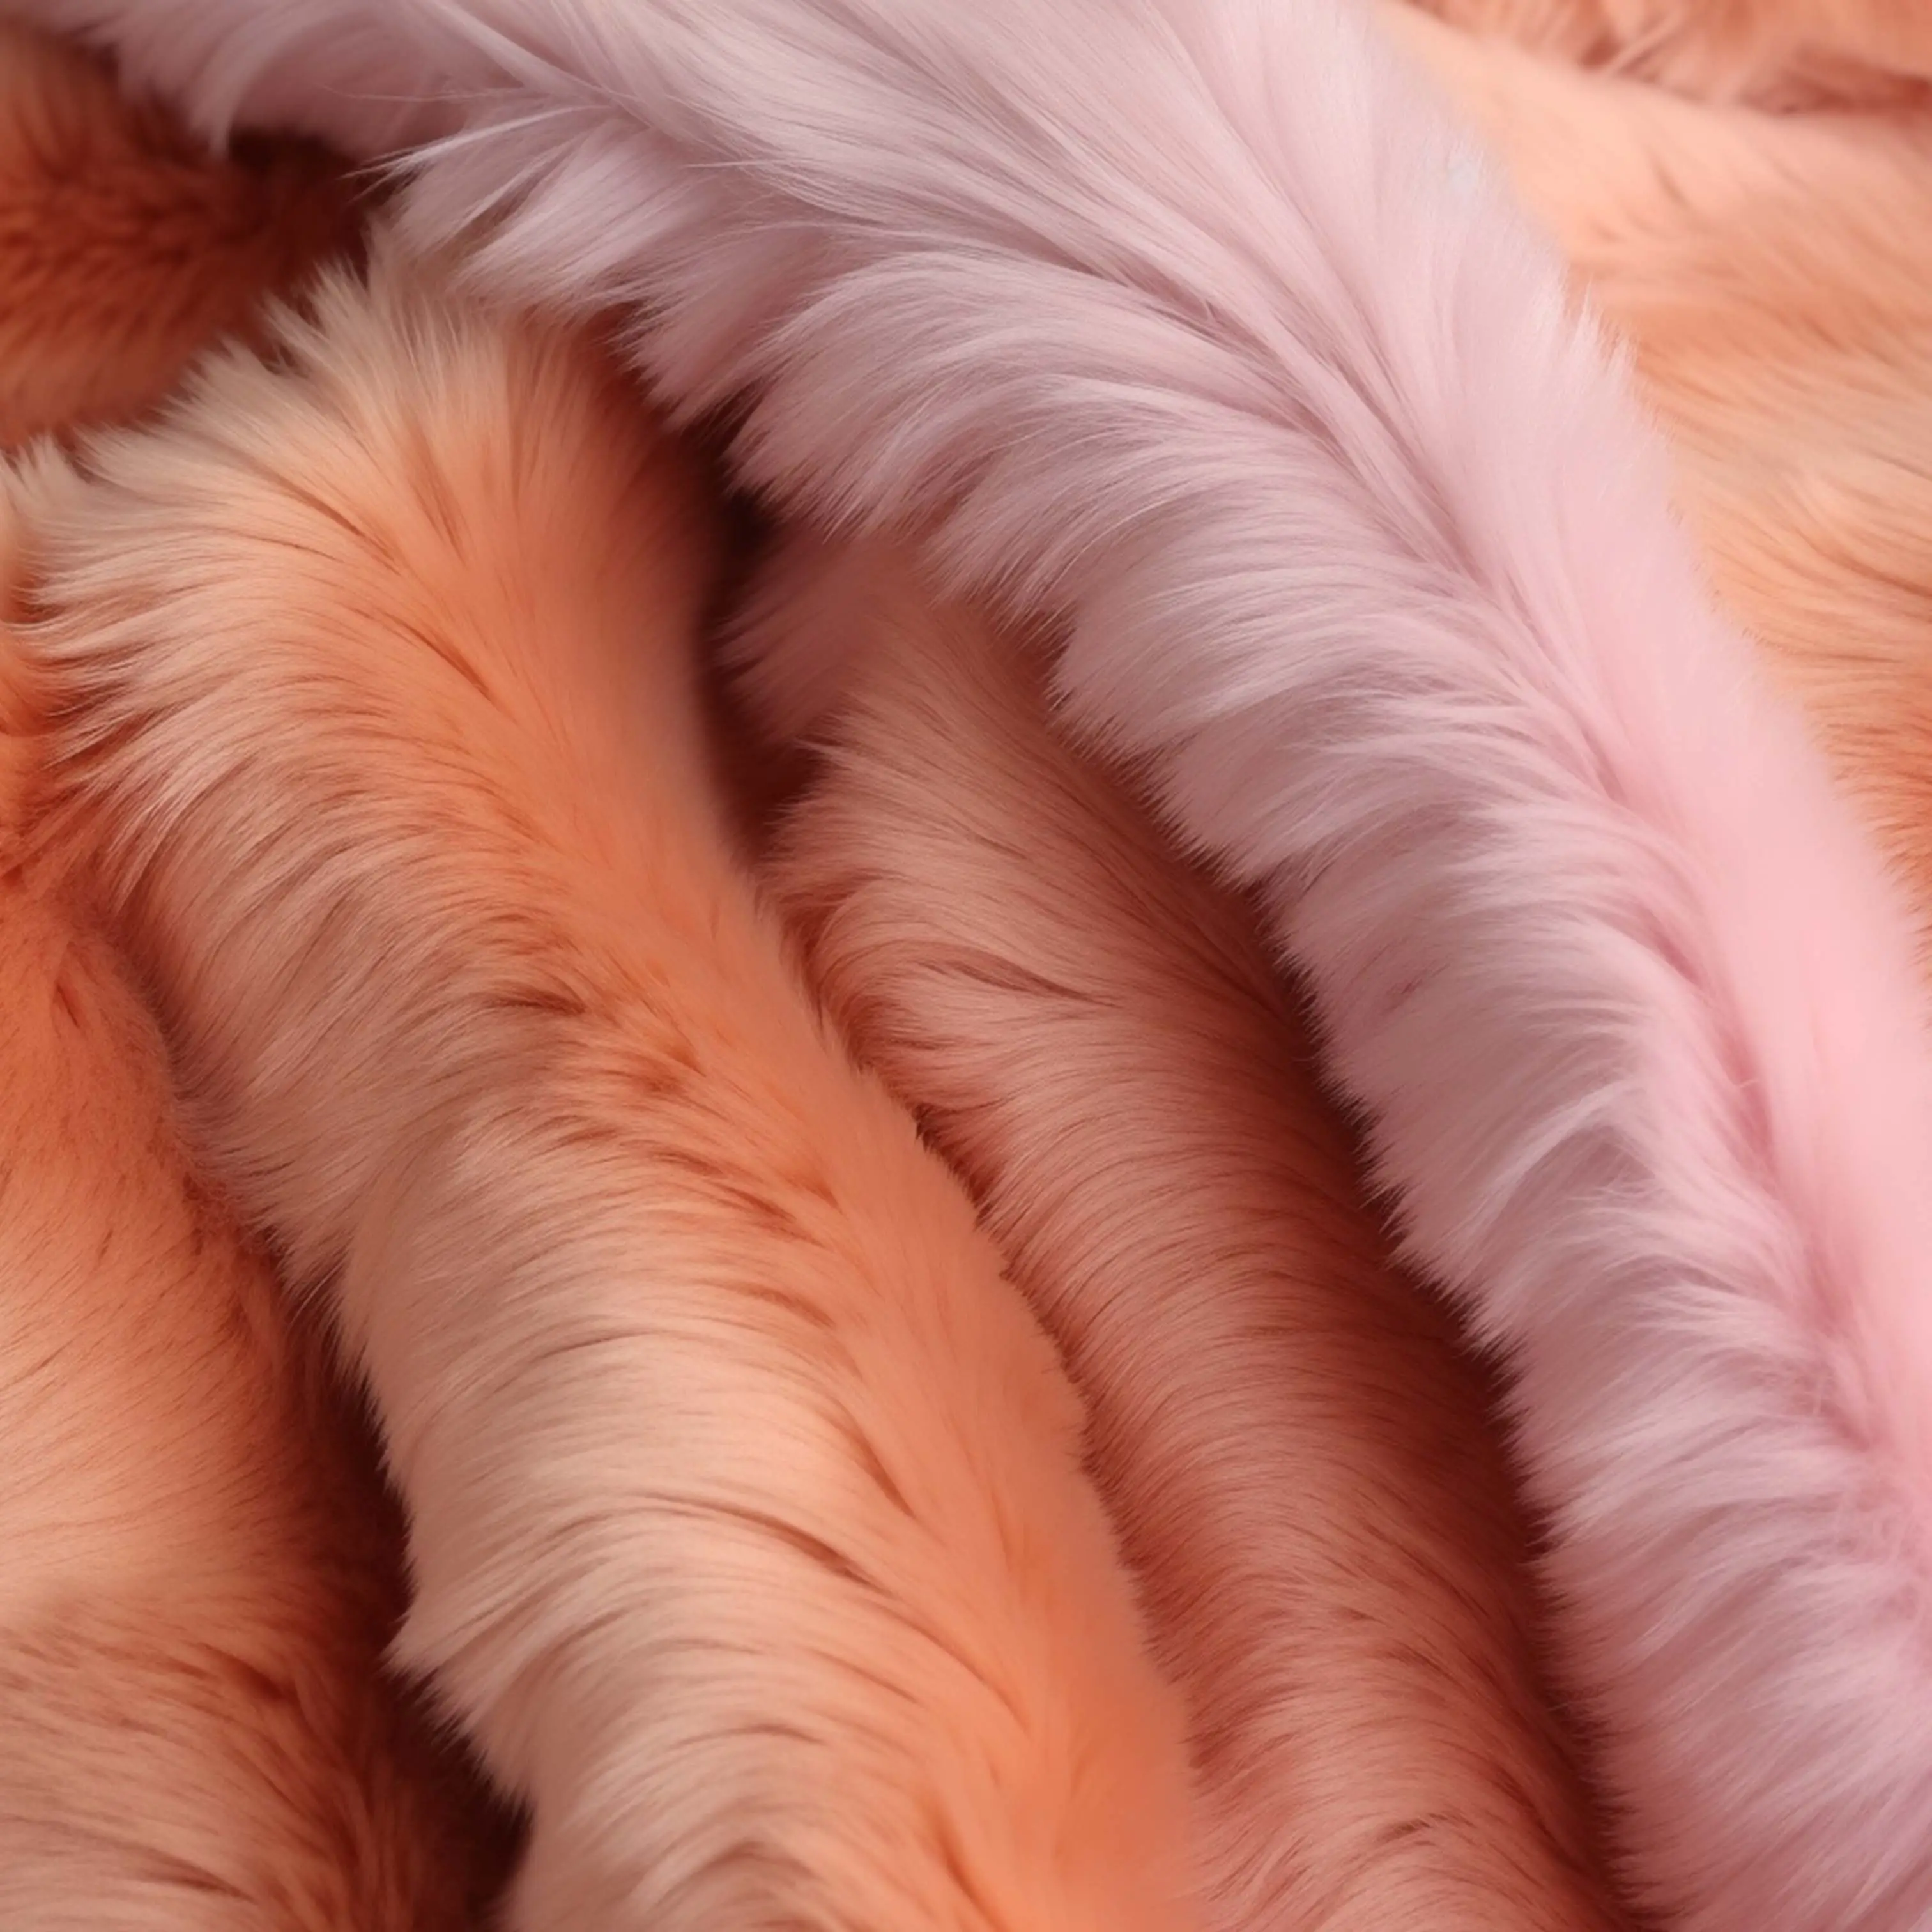 कस्टम कृत्रिम लंबा ढेर खरगोश नरम सबसे सस्ता कृत्रिम फर पर्दा कपड़ा